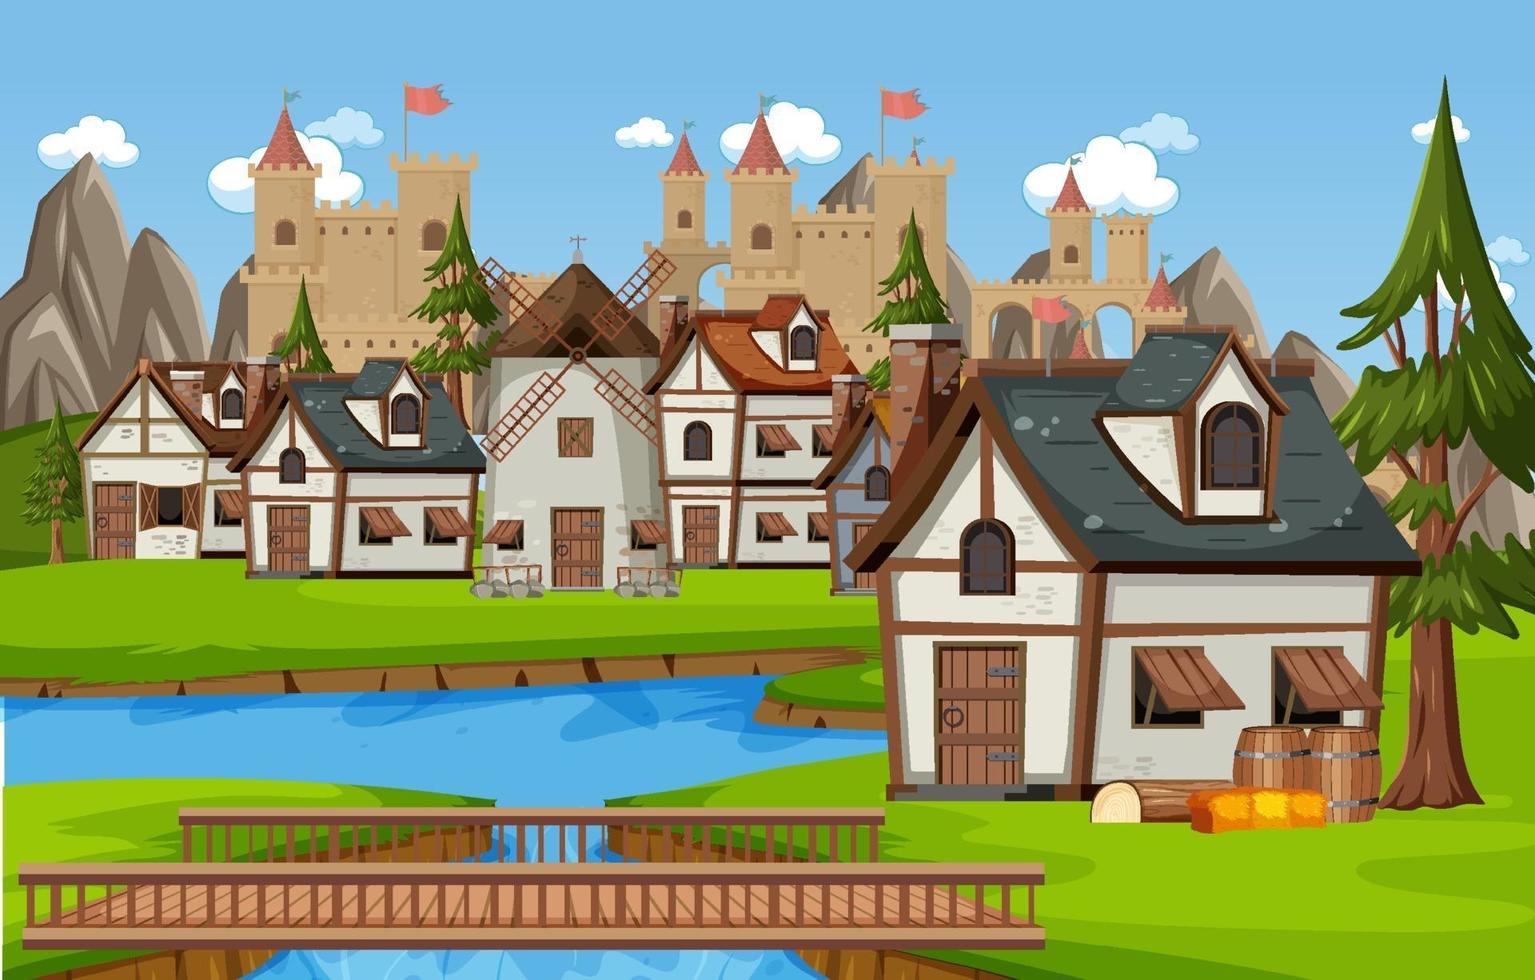 Medieval village scene with castle background vector